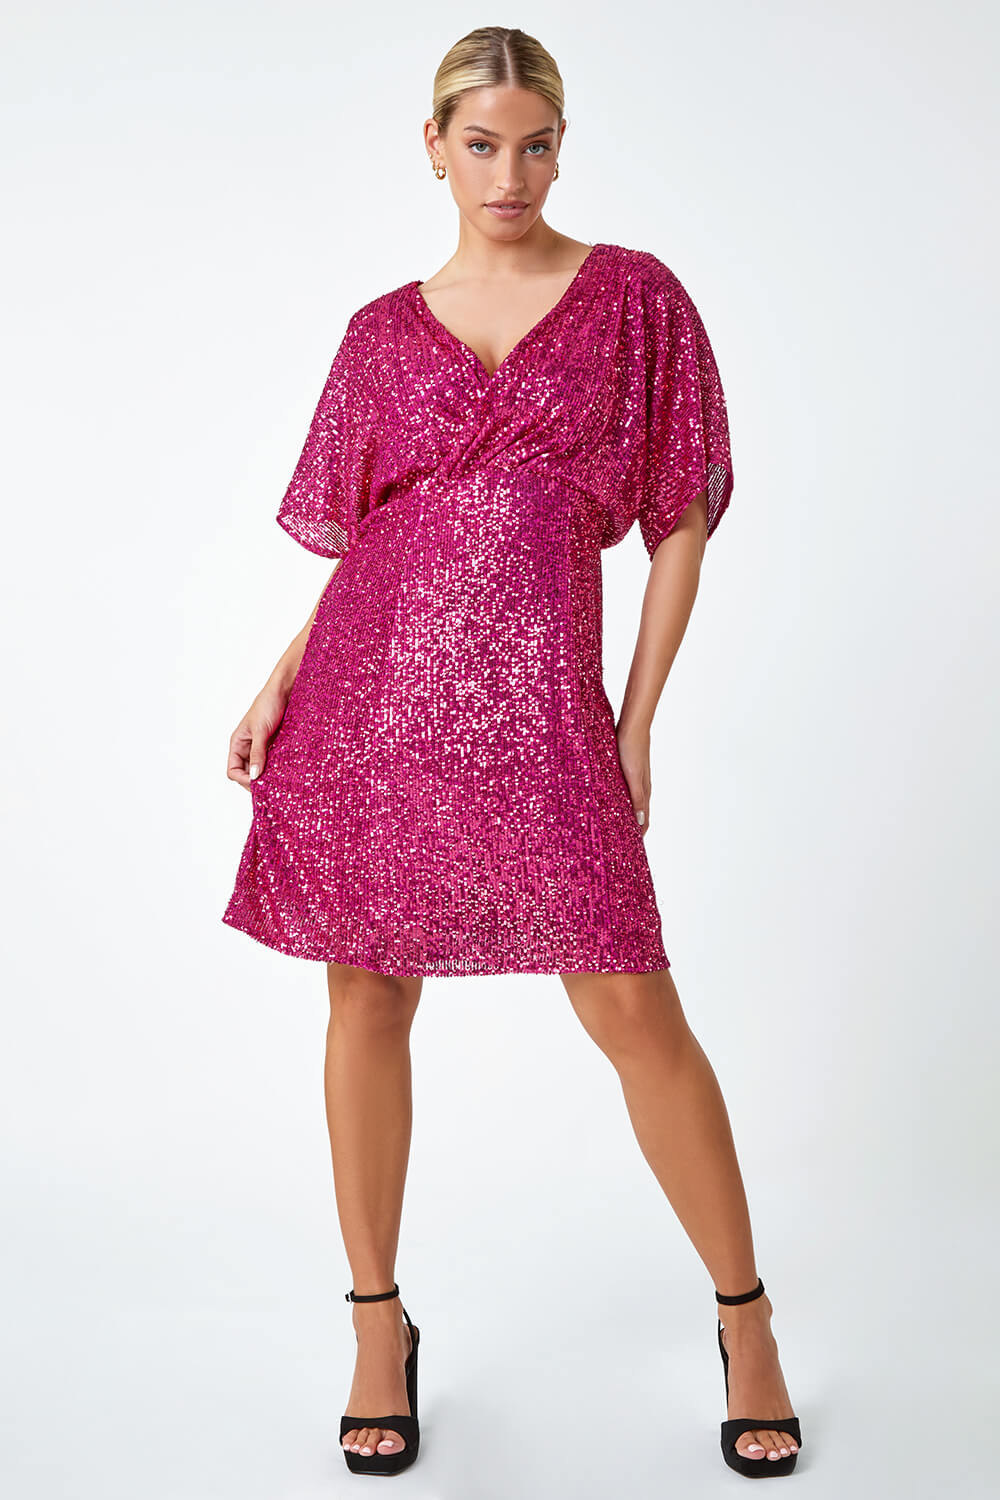 PINK Sequin Embellished Wrap Stretch Dress, Image 2 of 6